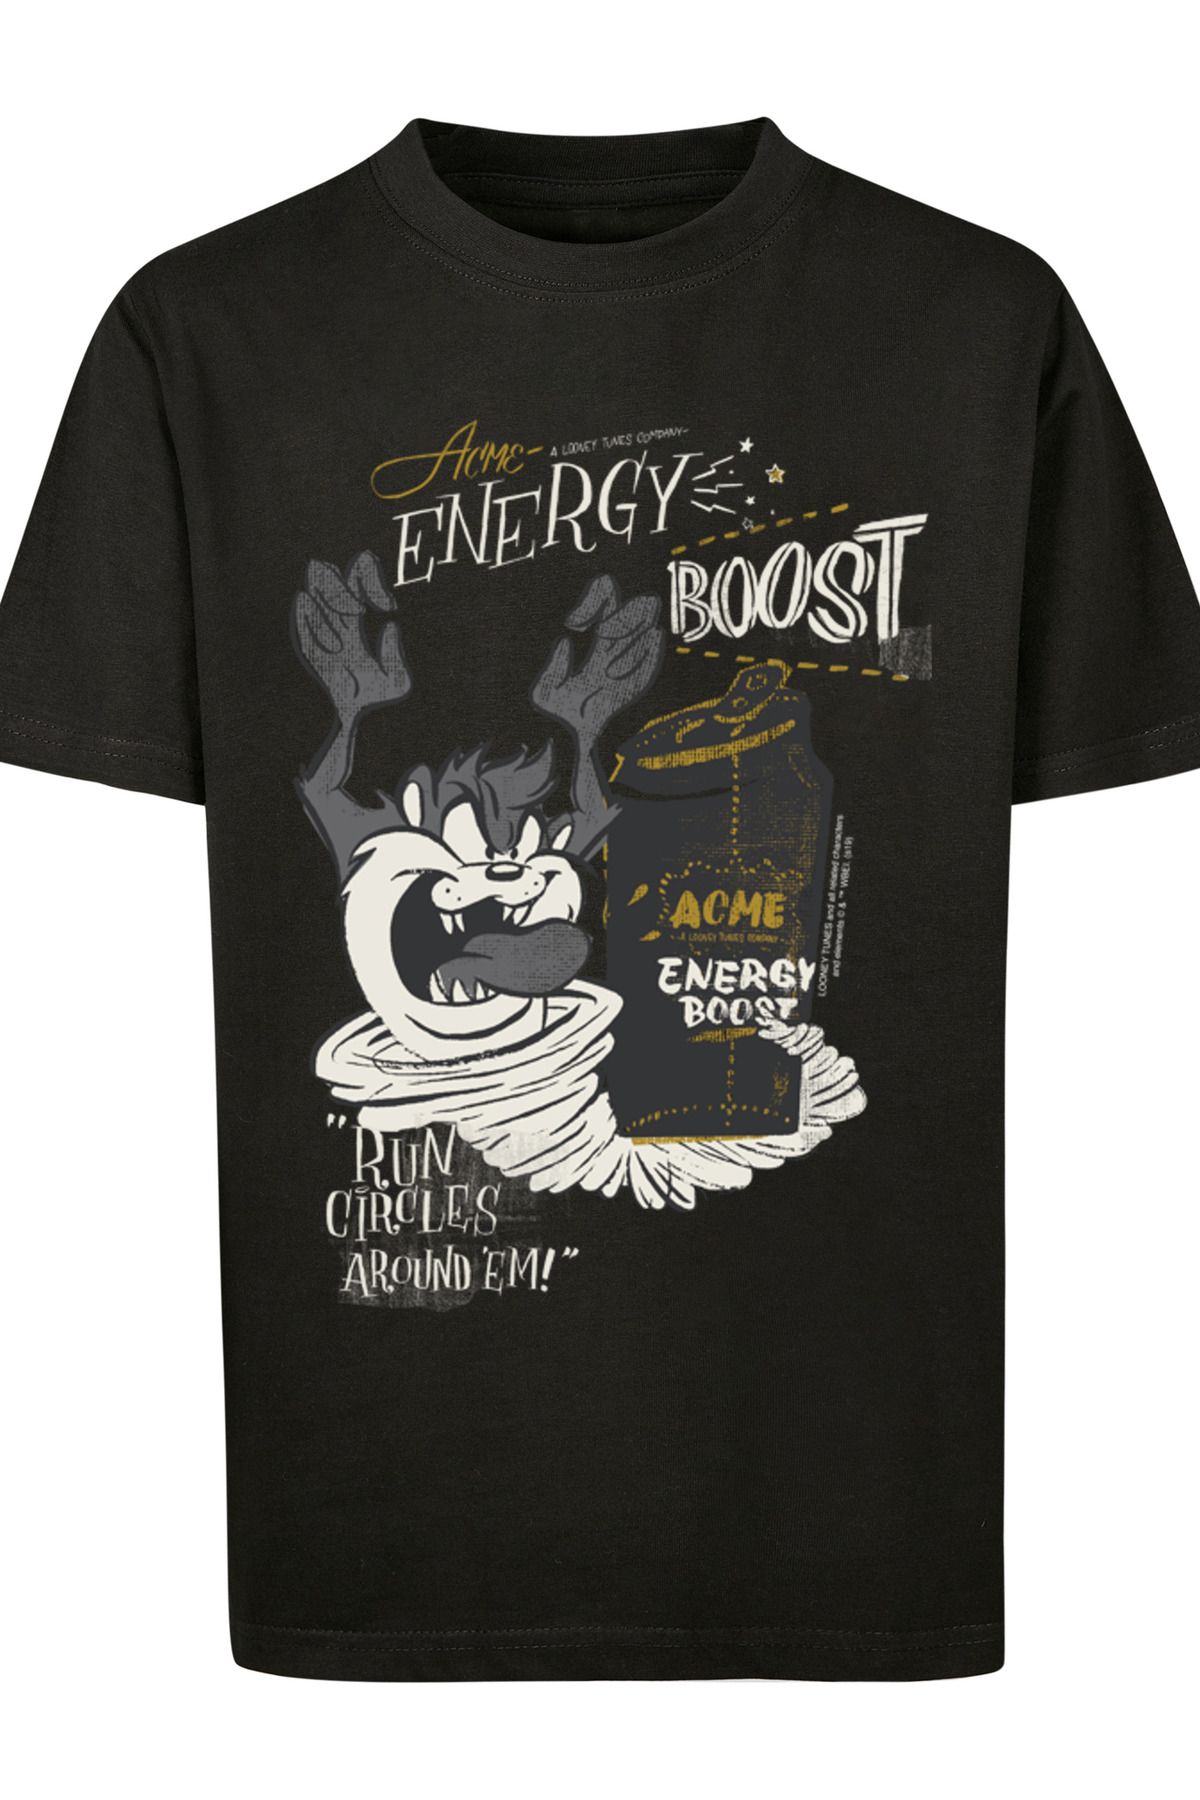 - Kinder Tunes Basic Energy Looney Kids Taz T-Shirt F4NT4STIC Trendyol Boost-BLK mit